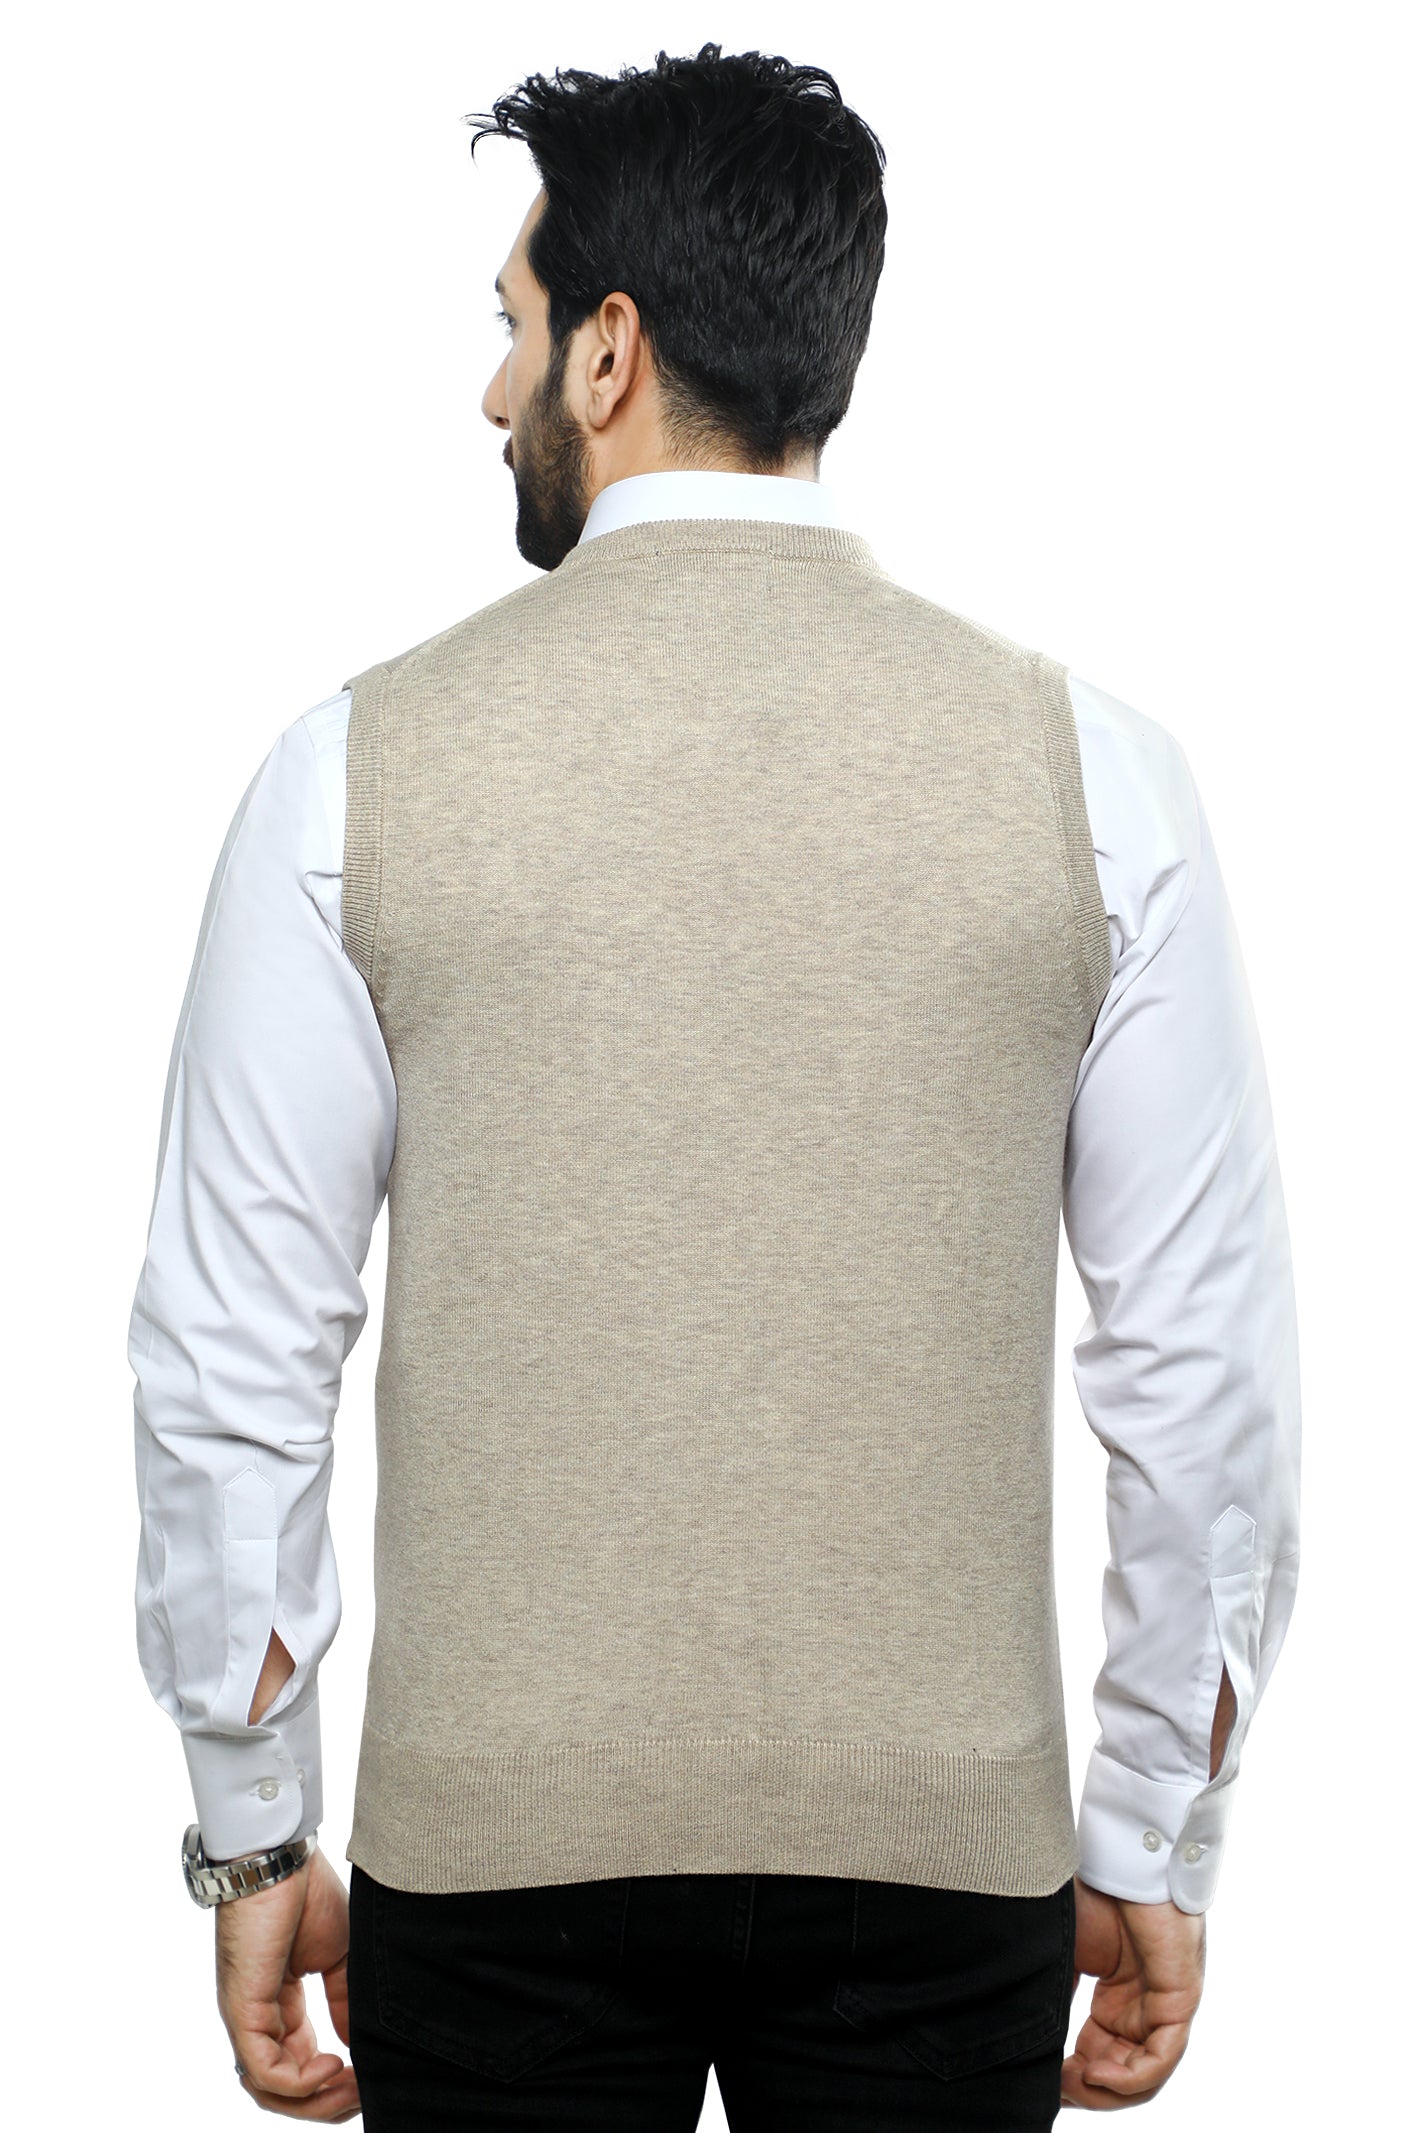 Gents Sweater (Sleeveless) SKU: SA607-FAWN - Diners